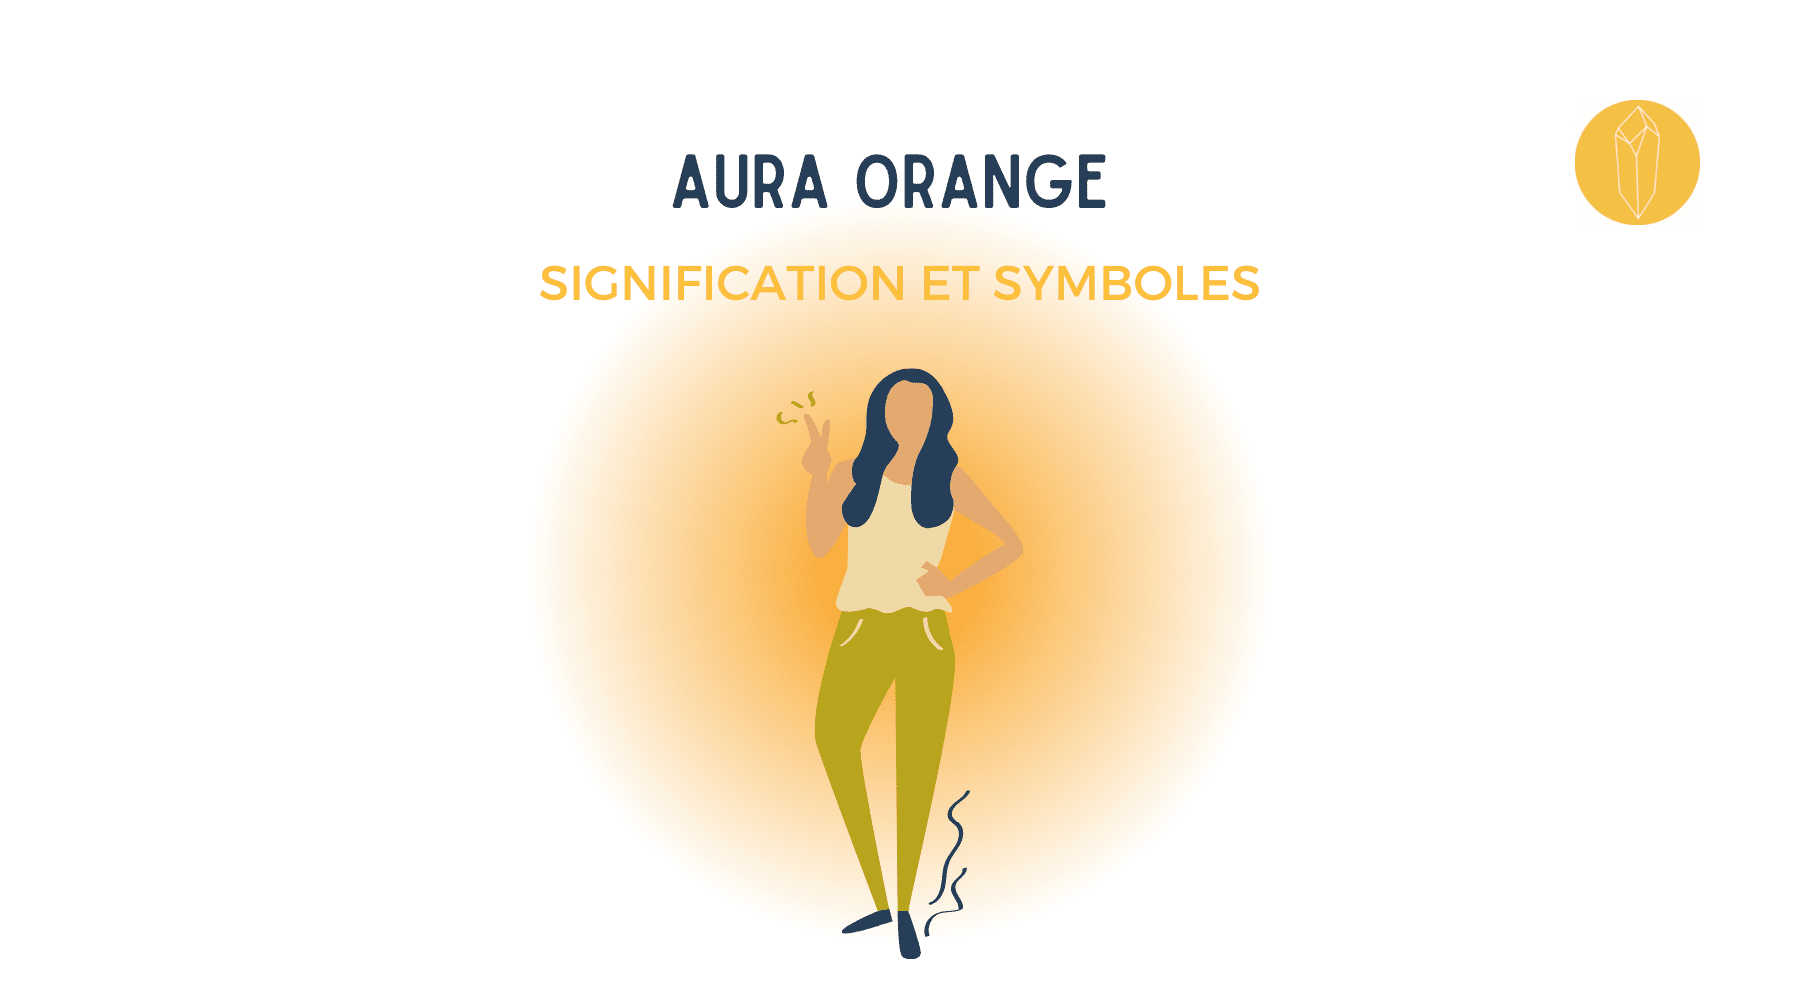 Aura orange